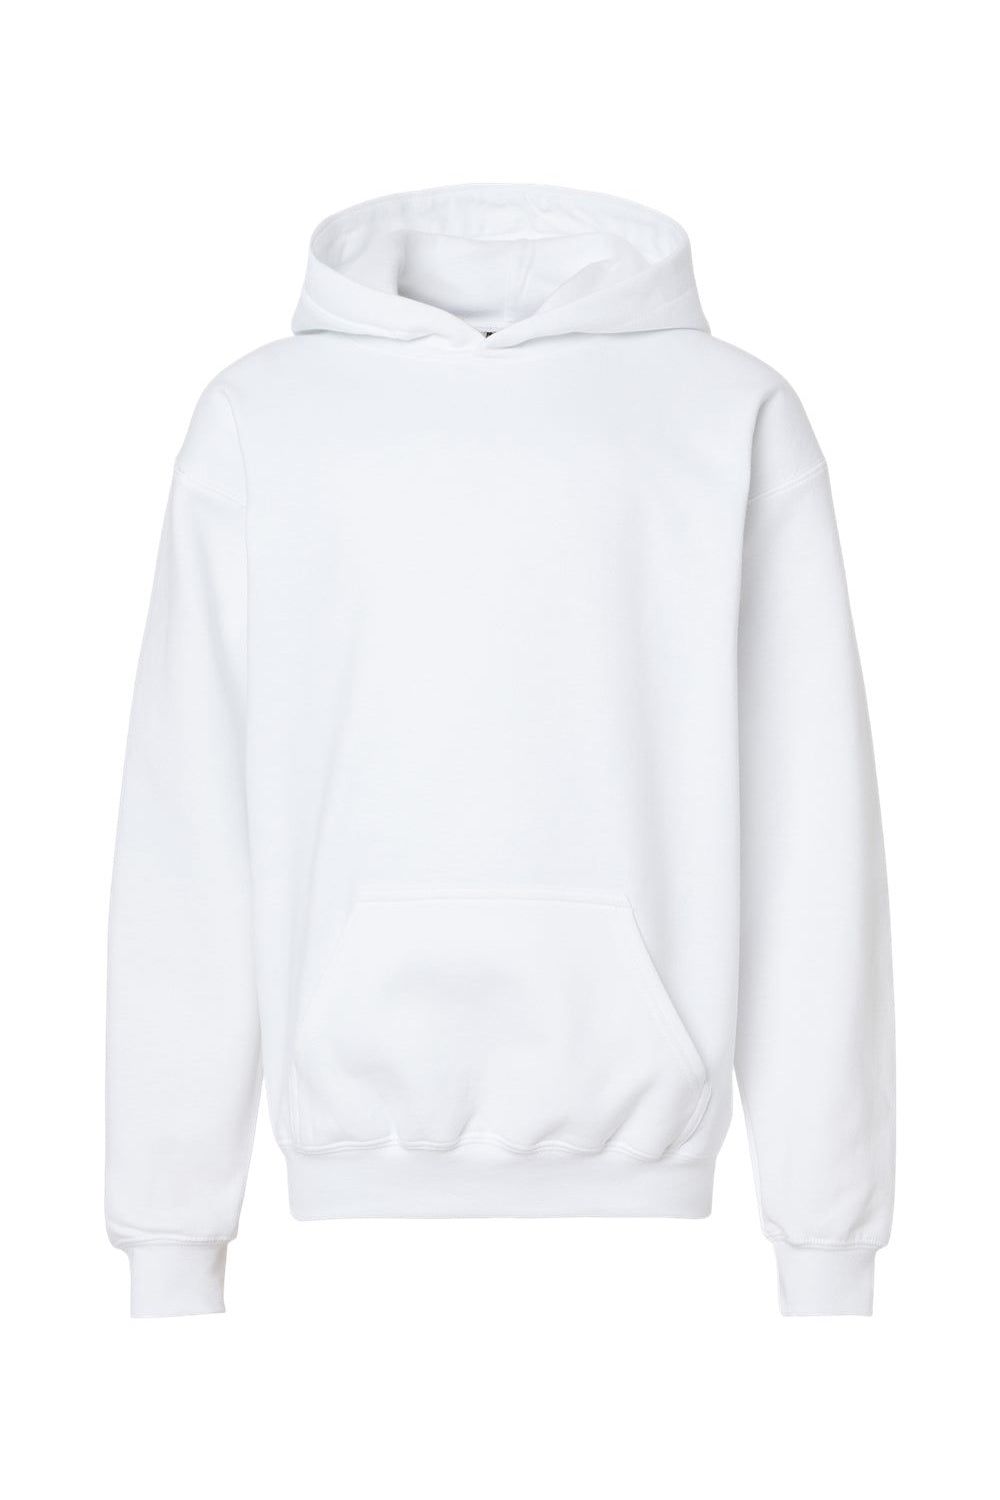 Gildan SF500B Youth Softstyle Hooded Sweatshirt Hoodie White Flat Front